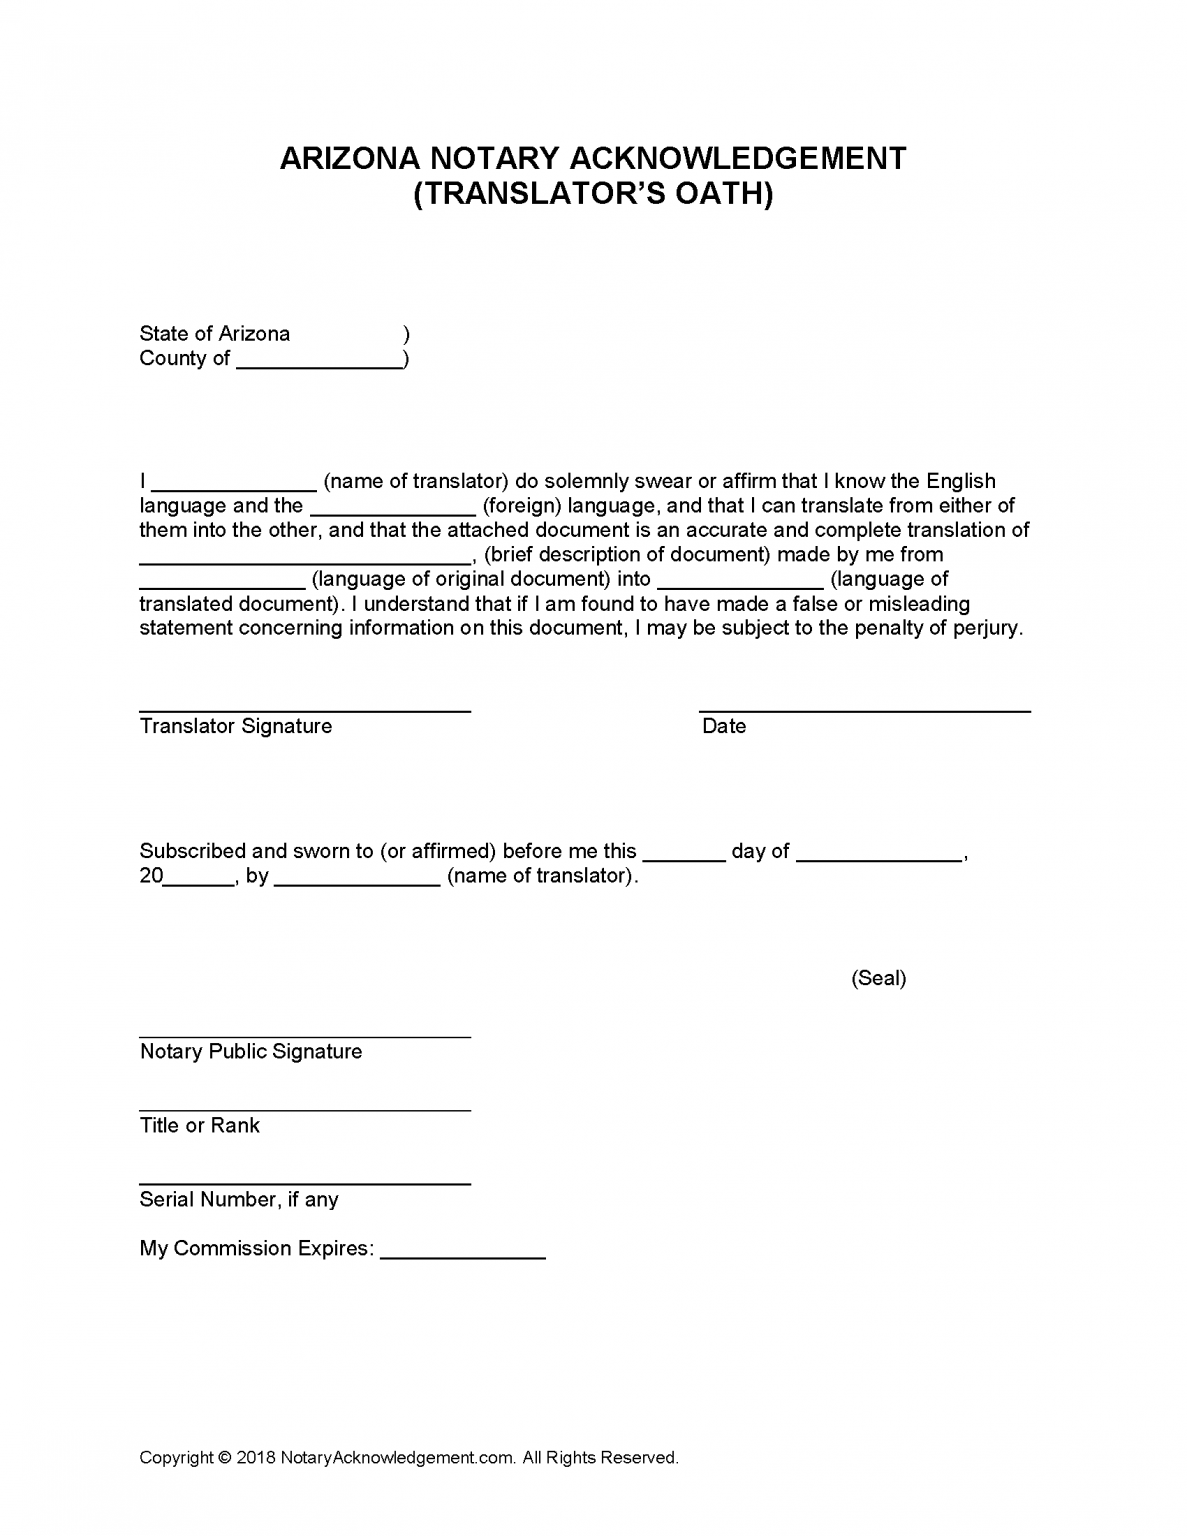 Arizona Notary Acknowledgement Form